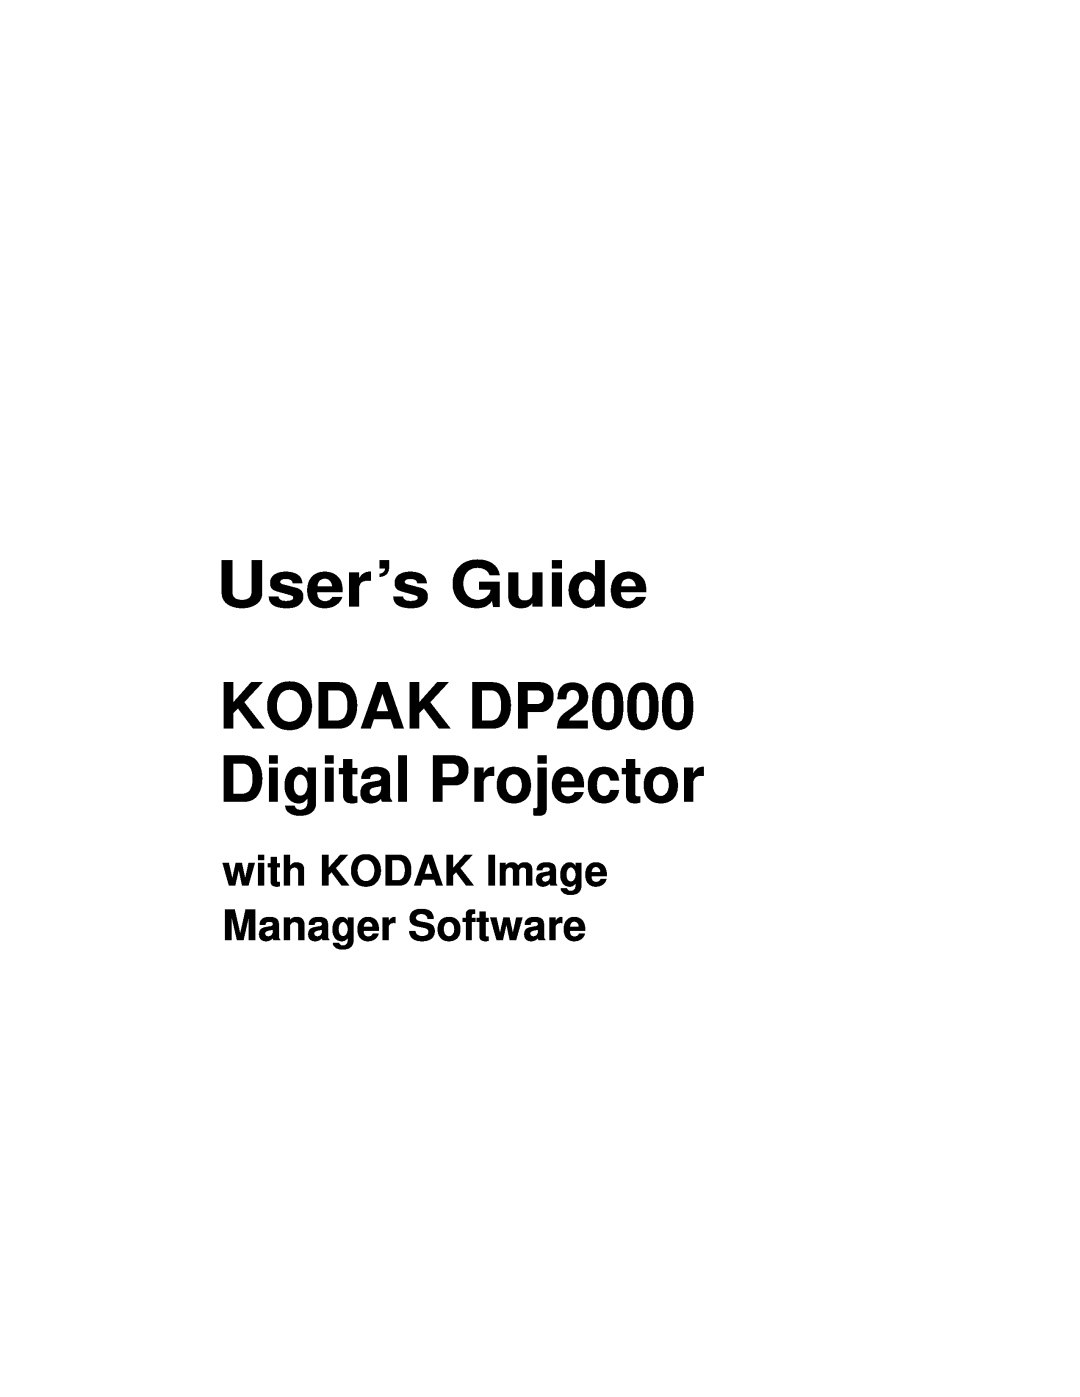 Kodak manual with KODAK Image Manager Software, User’s Guide KODAK DP2000 Digital Projector 